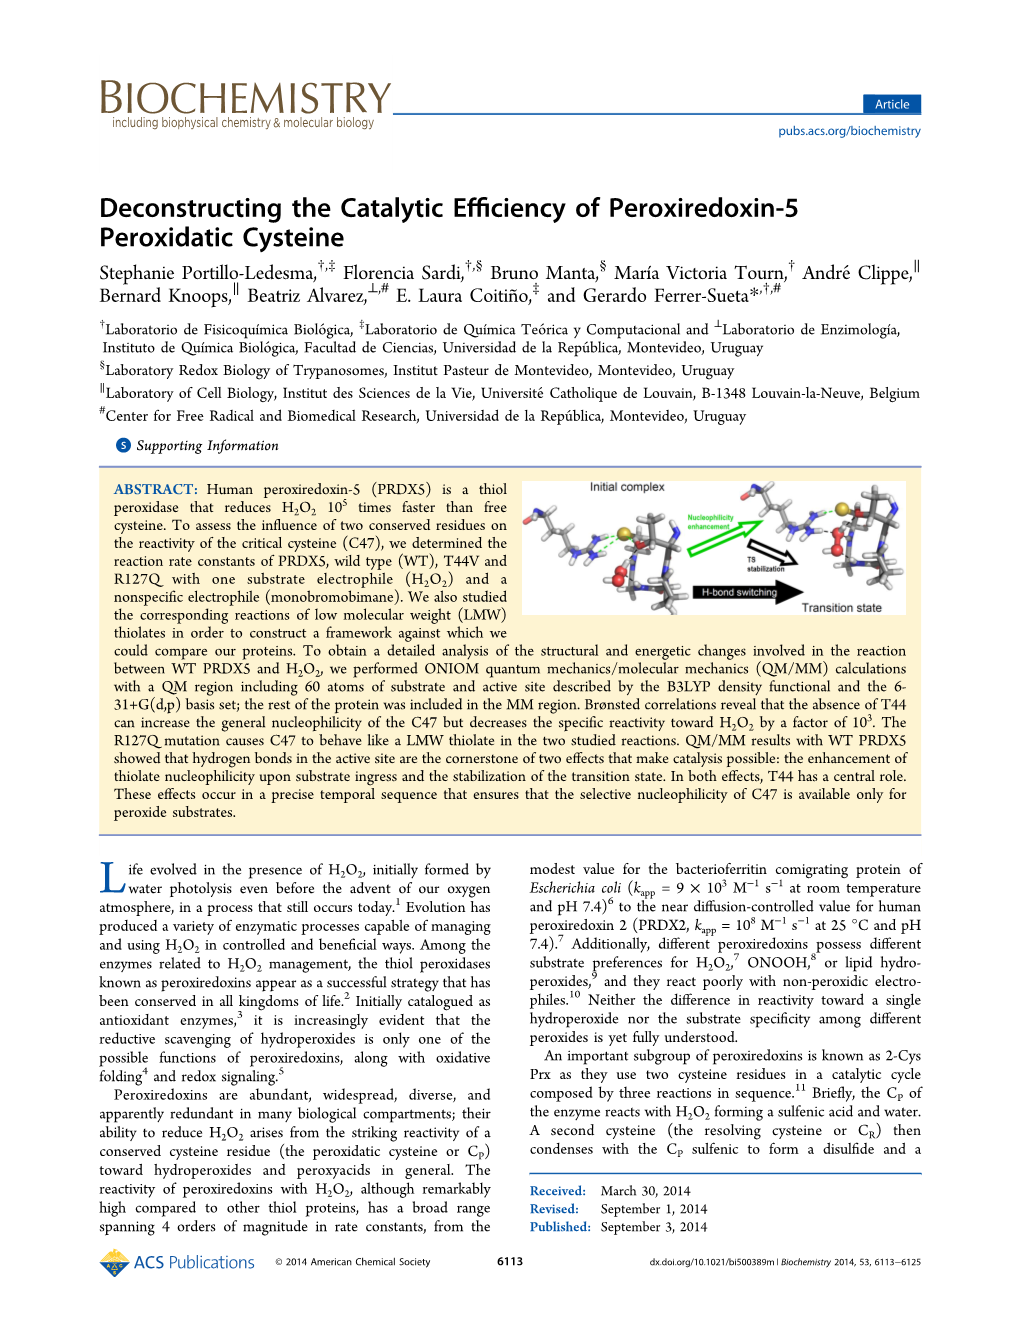 Deconstructing the Catalytic Efficiency of Peroxiredoxin‑5 Peroxidatic